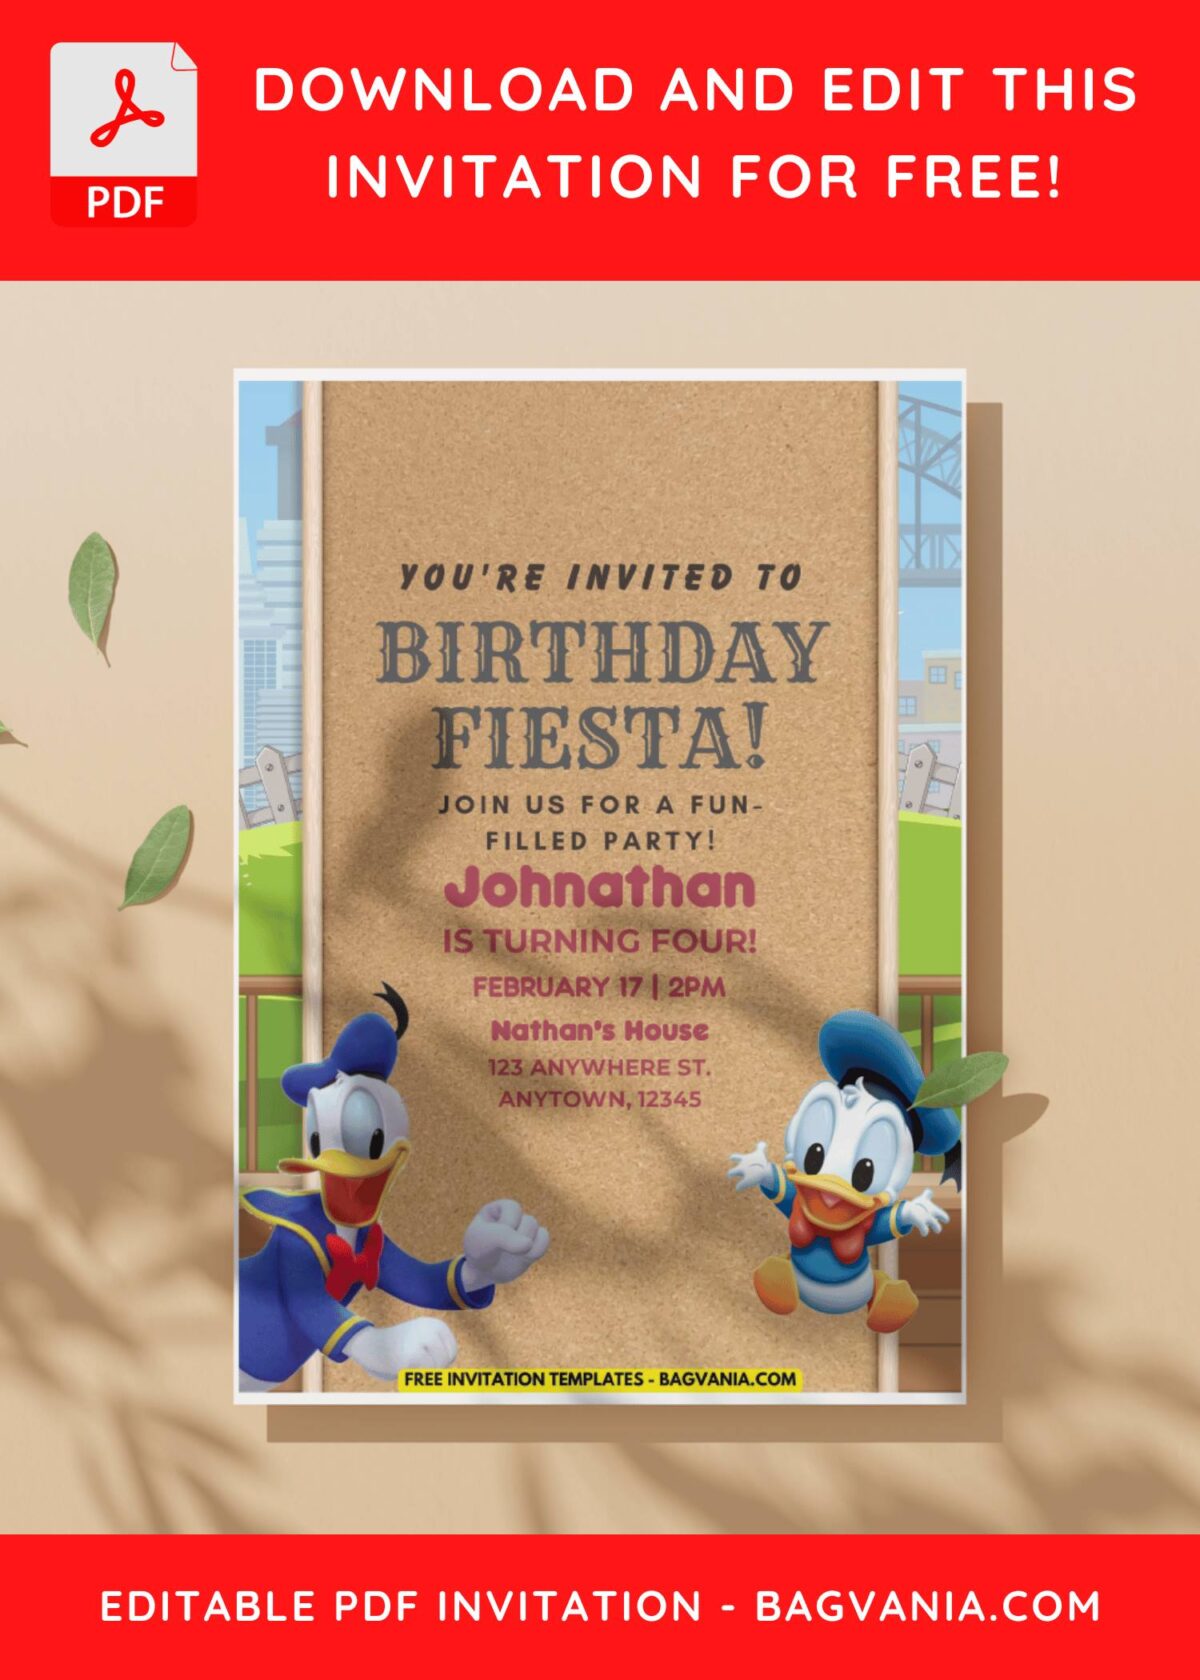 (Free Editable PDF) Classic Donald Duck Birthday Invitation Templates I